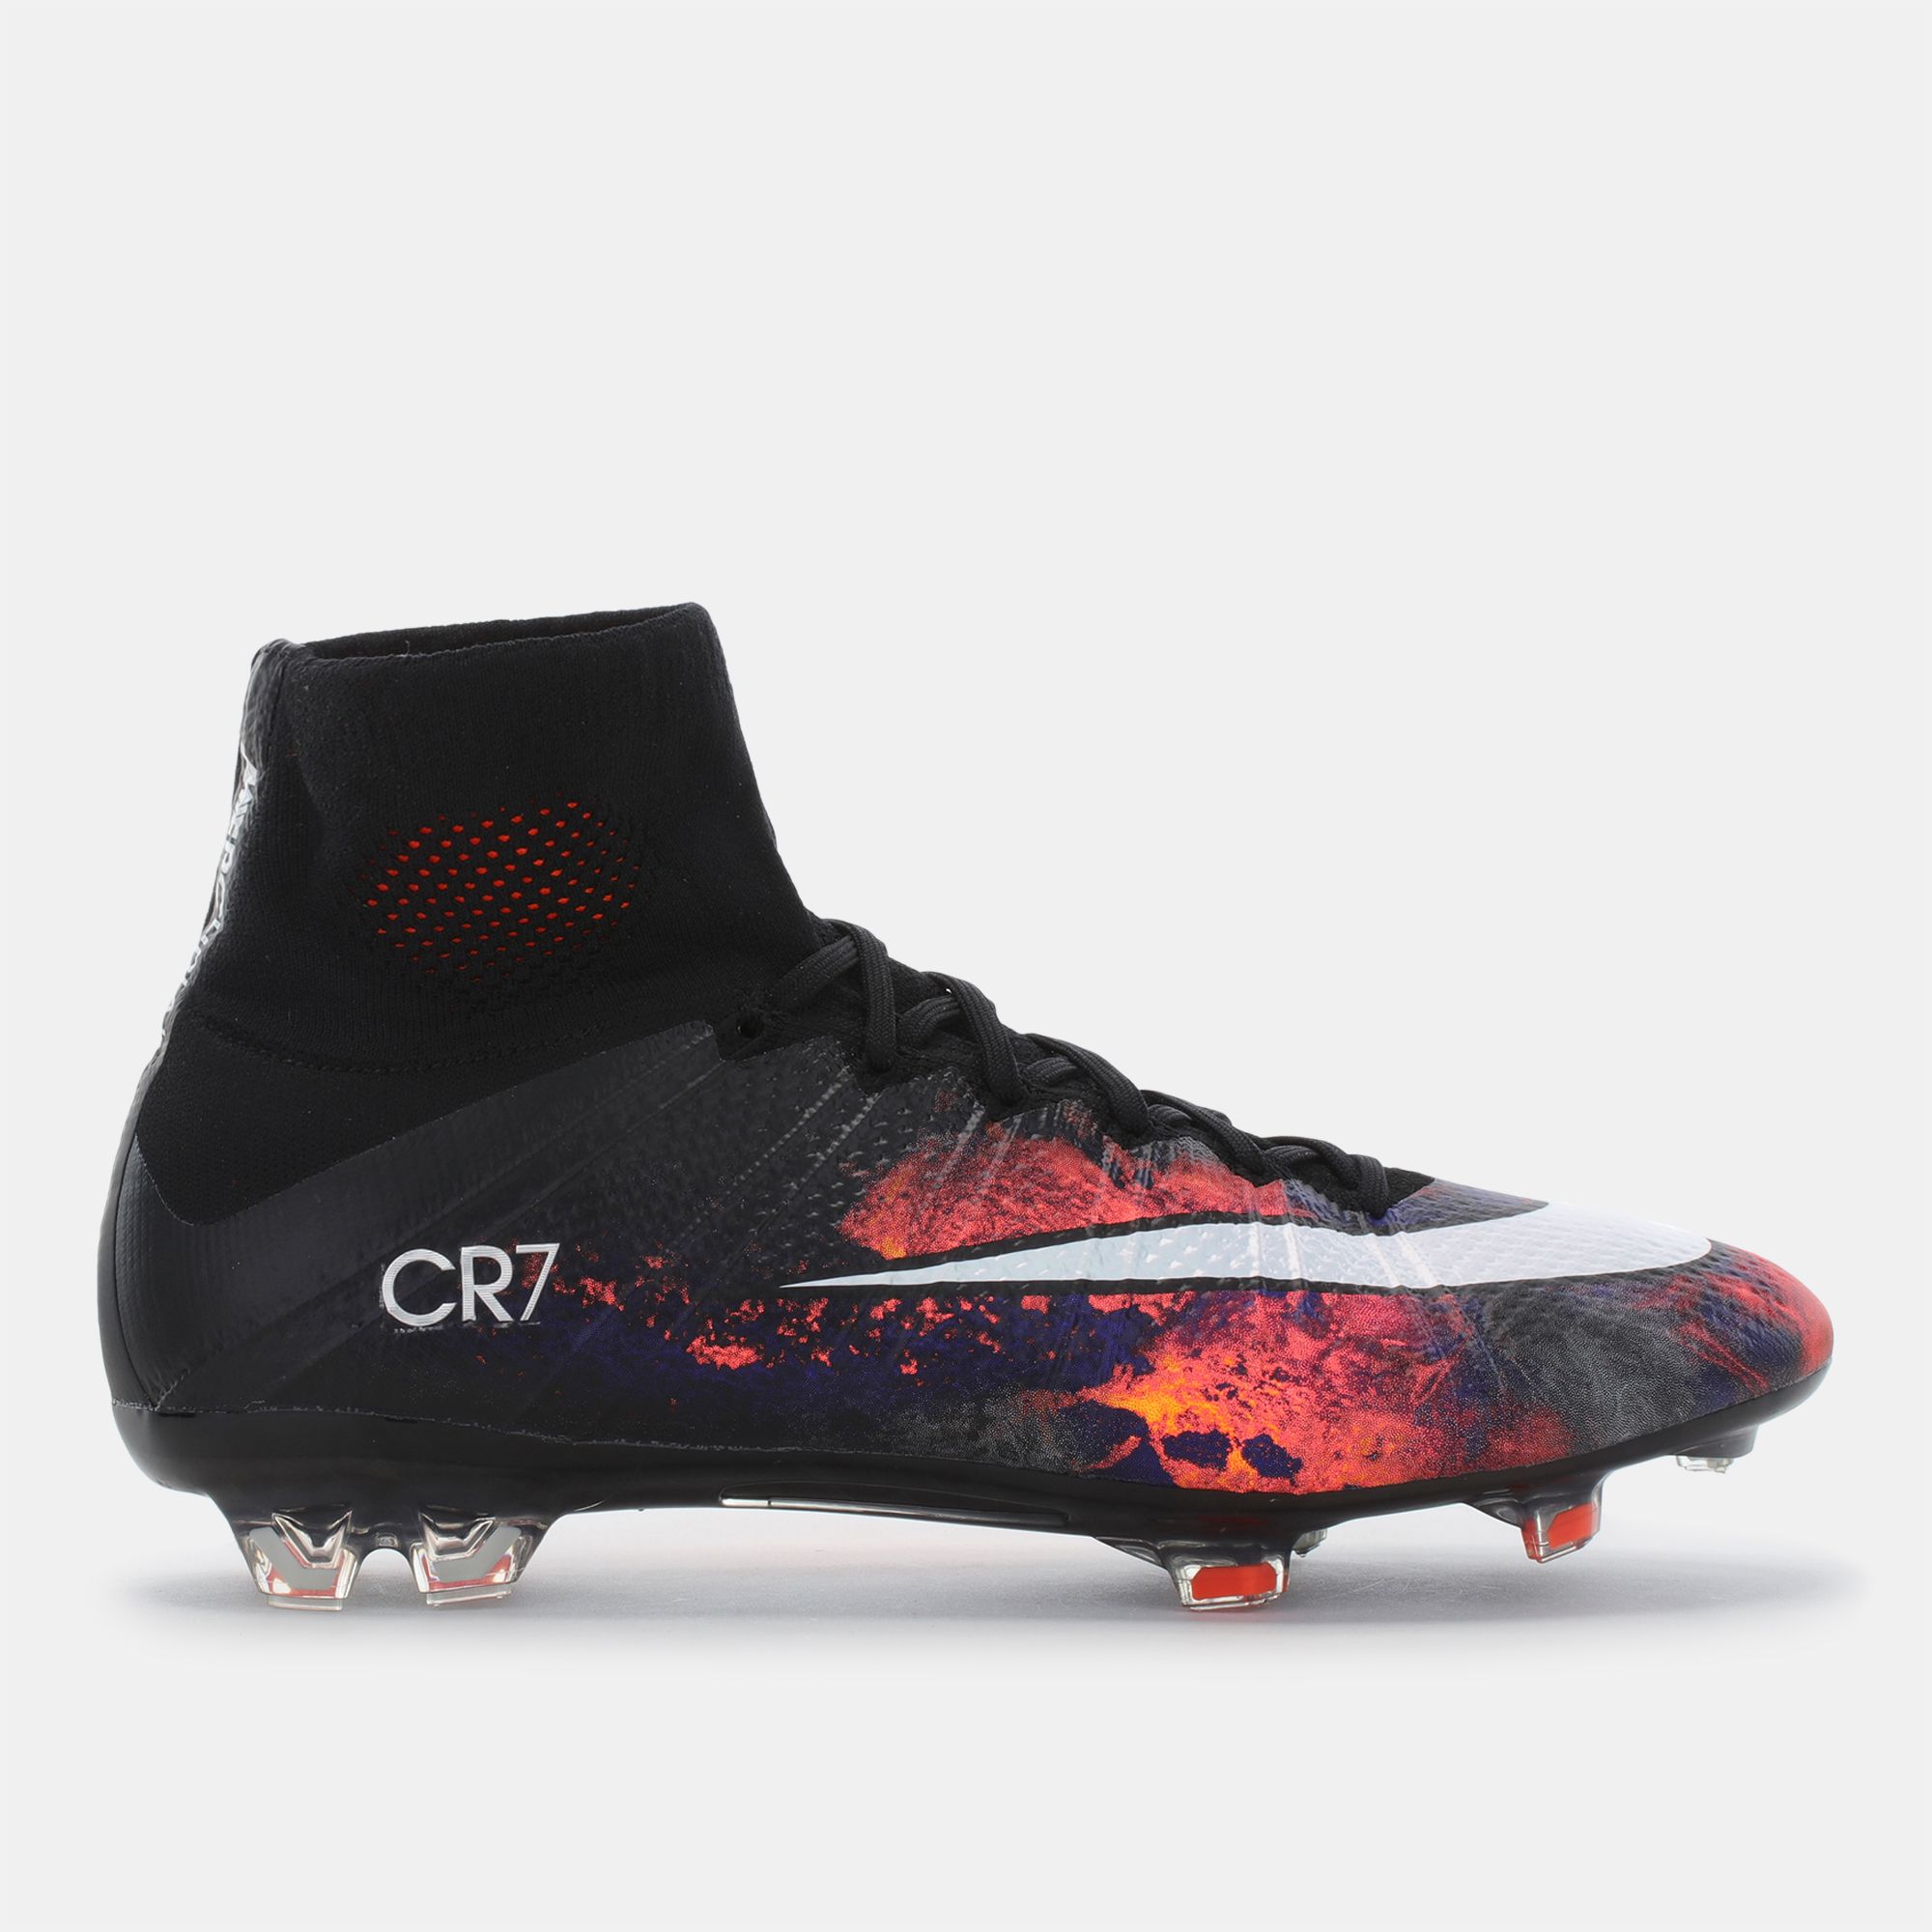 cr7 spike shoes